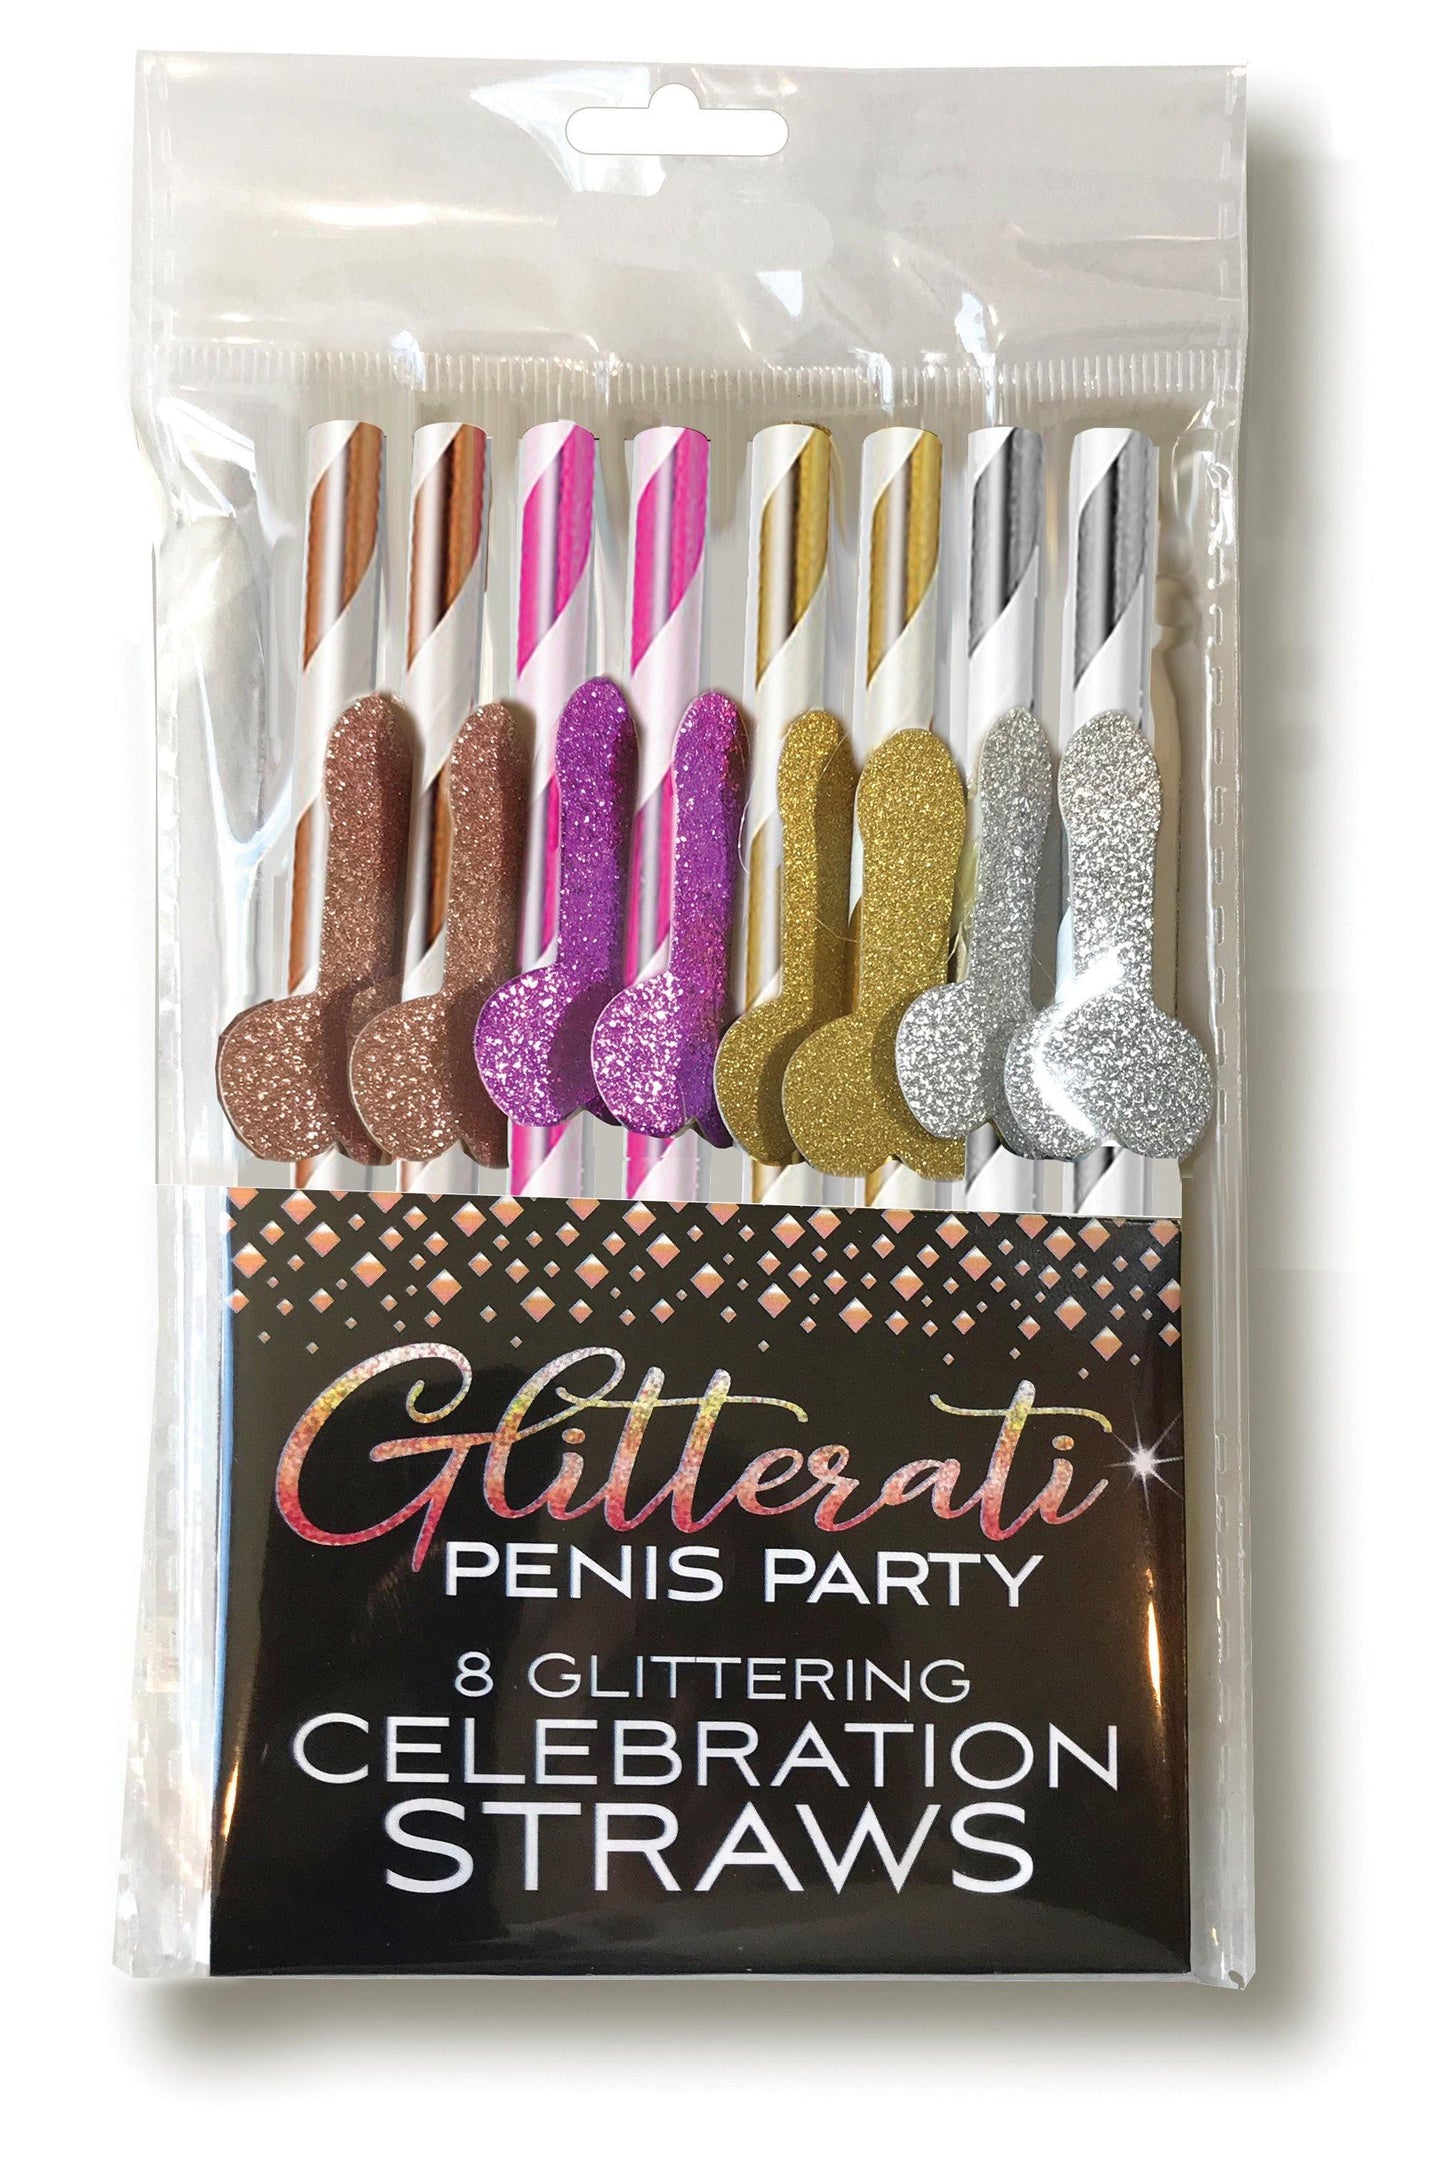 Glitterati Penis Party Celebration Straws - 8 Count - My Sex Toy Hub